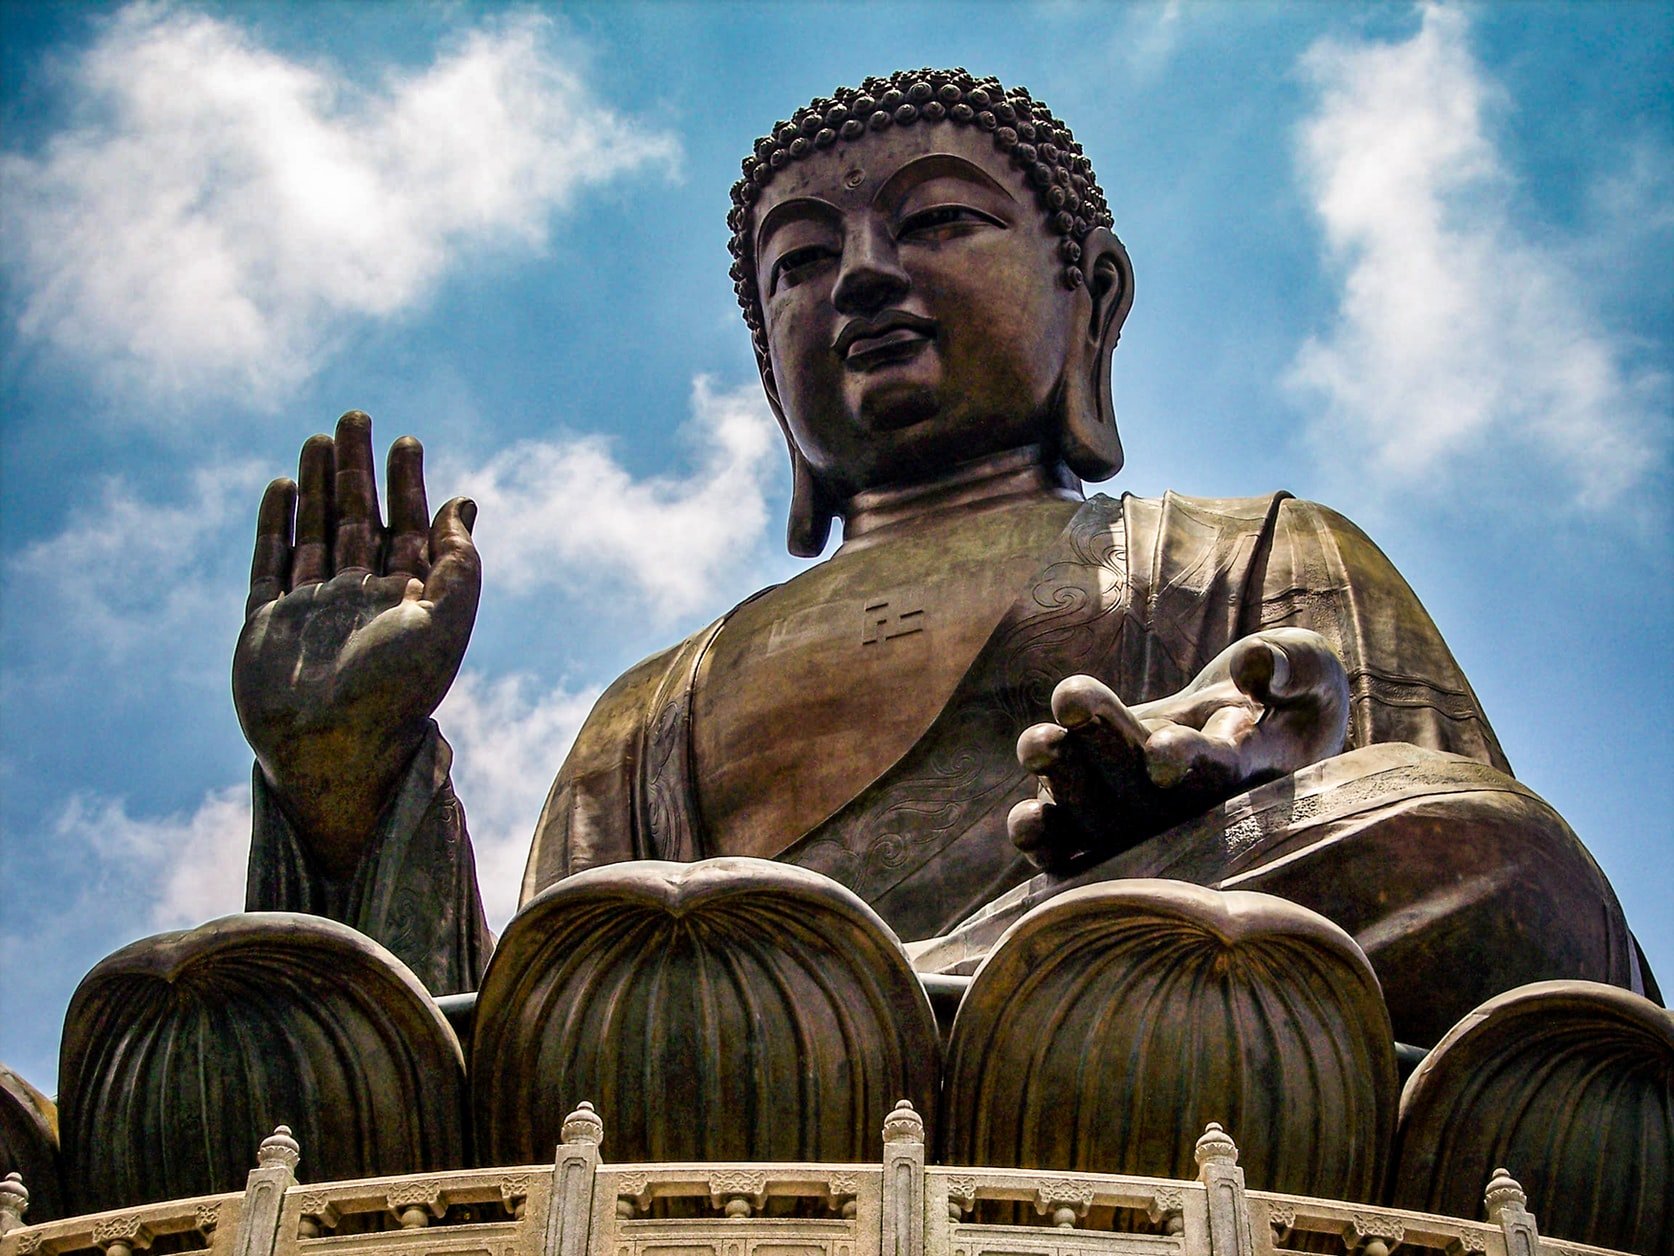 Buddha Statue on Lantau Island up close (Credit: Unsplash.com)